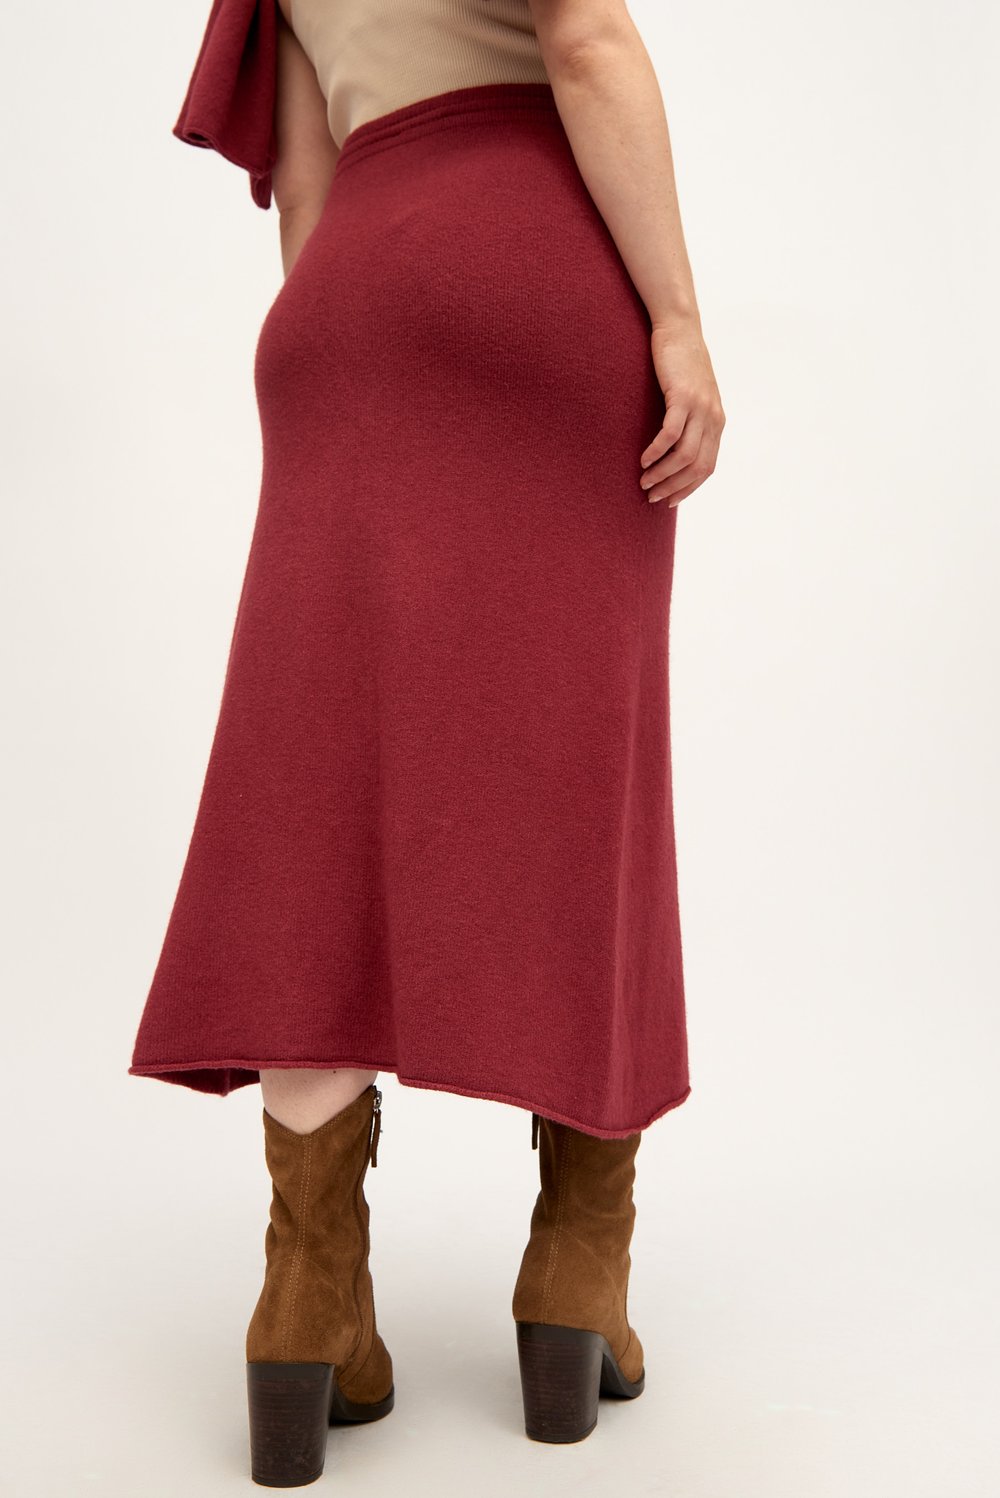 Falda Rojo Teja — Ropa de Mujer